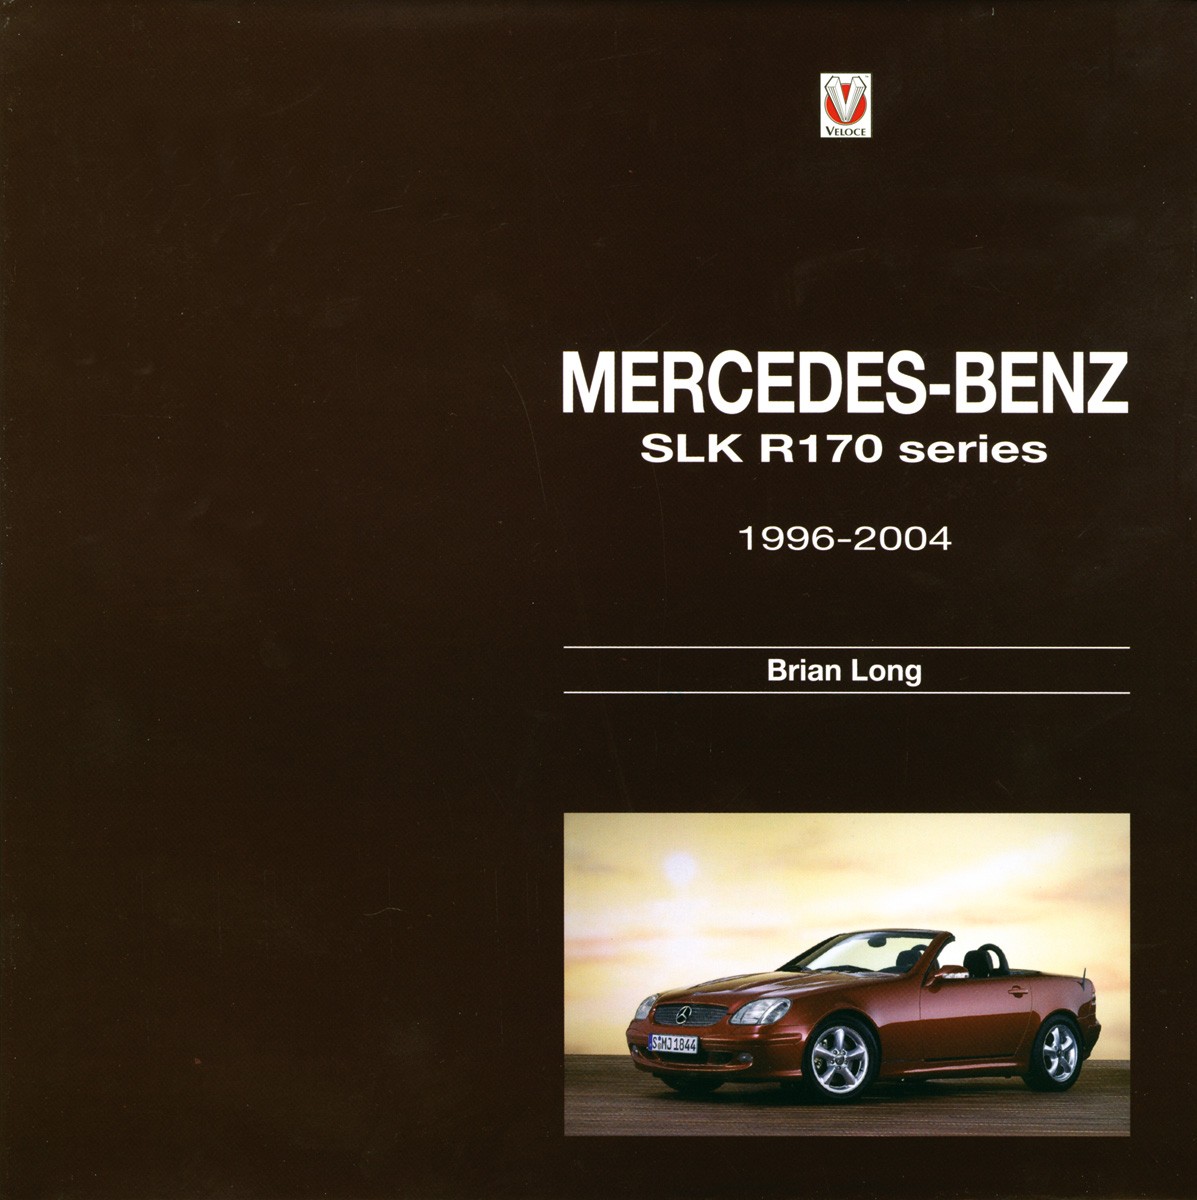 Mercedes-Benz SLK R170 series 1996-2004